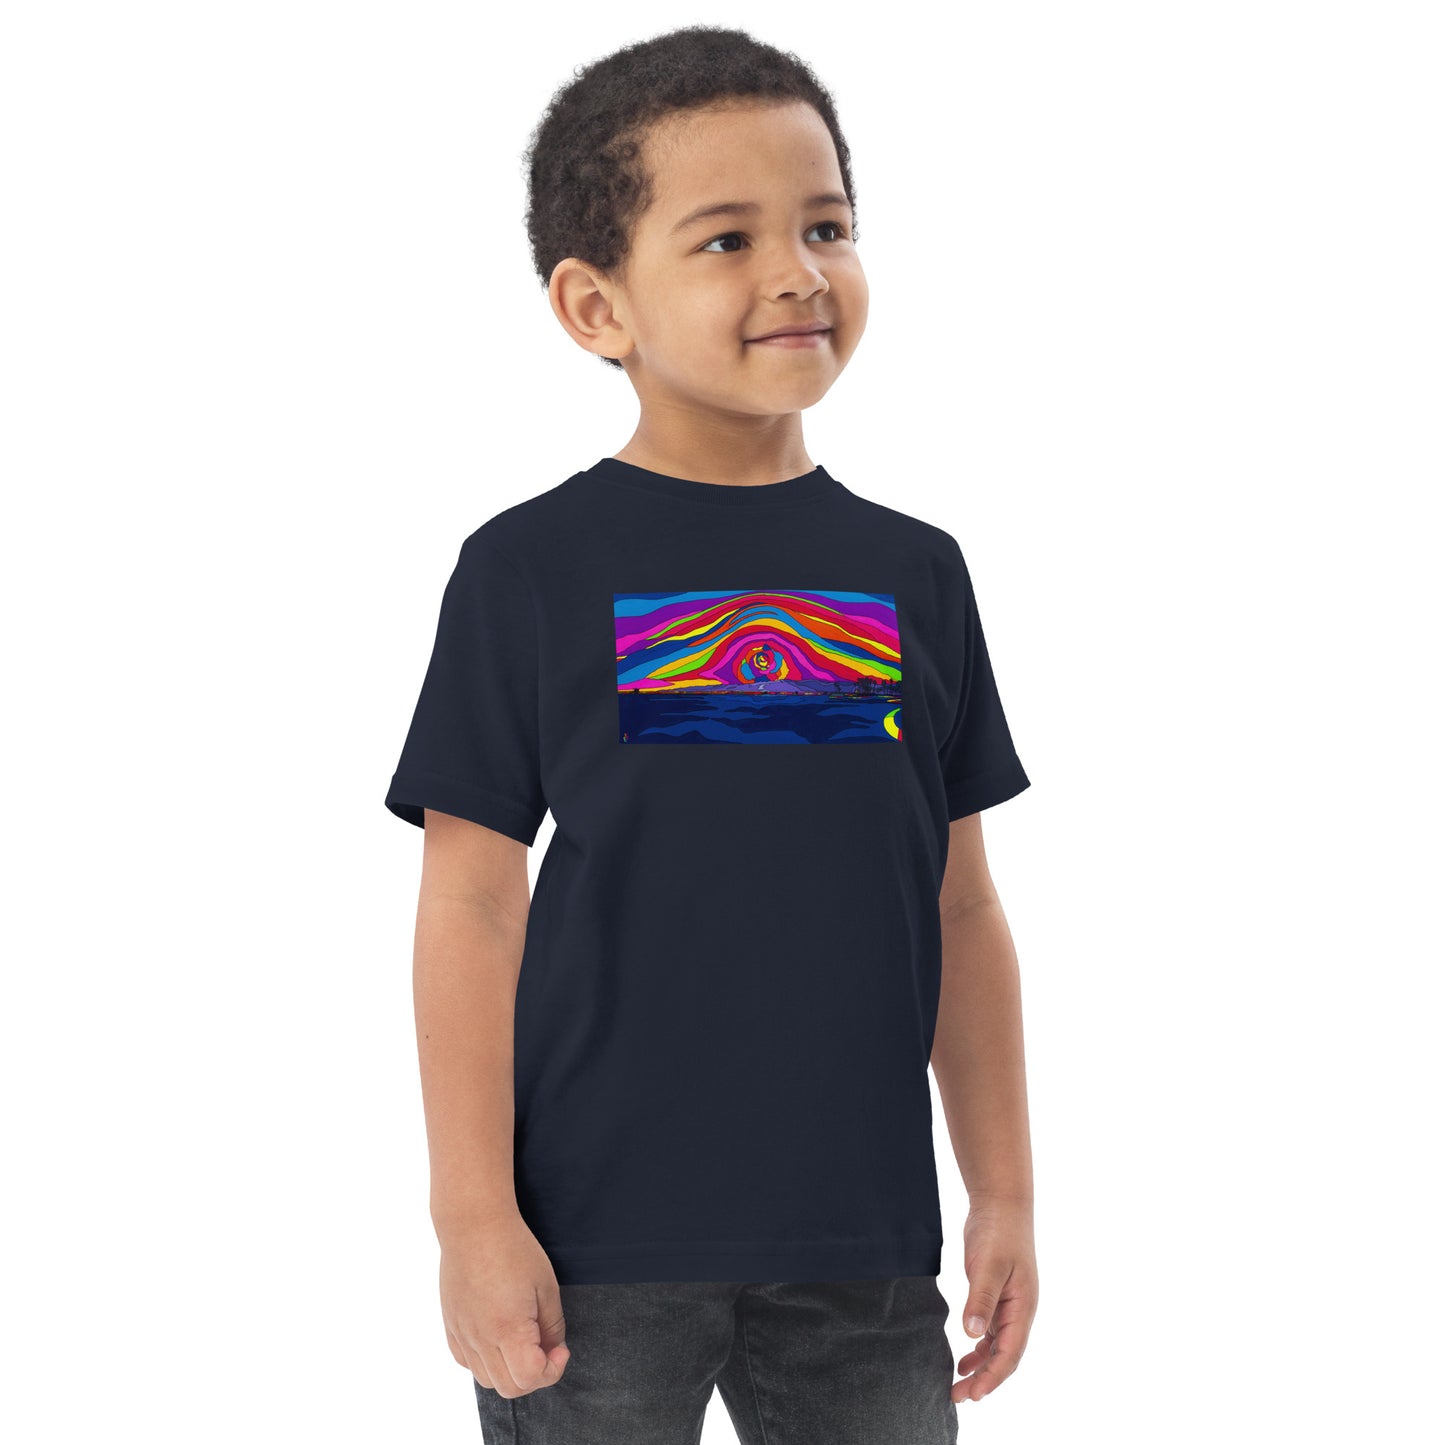 Rose Ave Sunset - Toddler jersey t-shirt